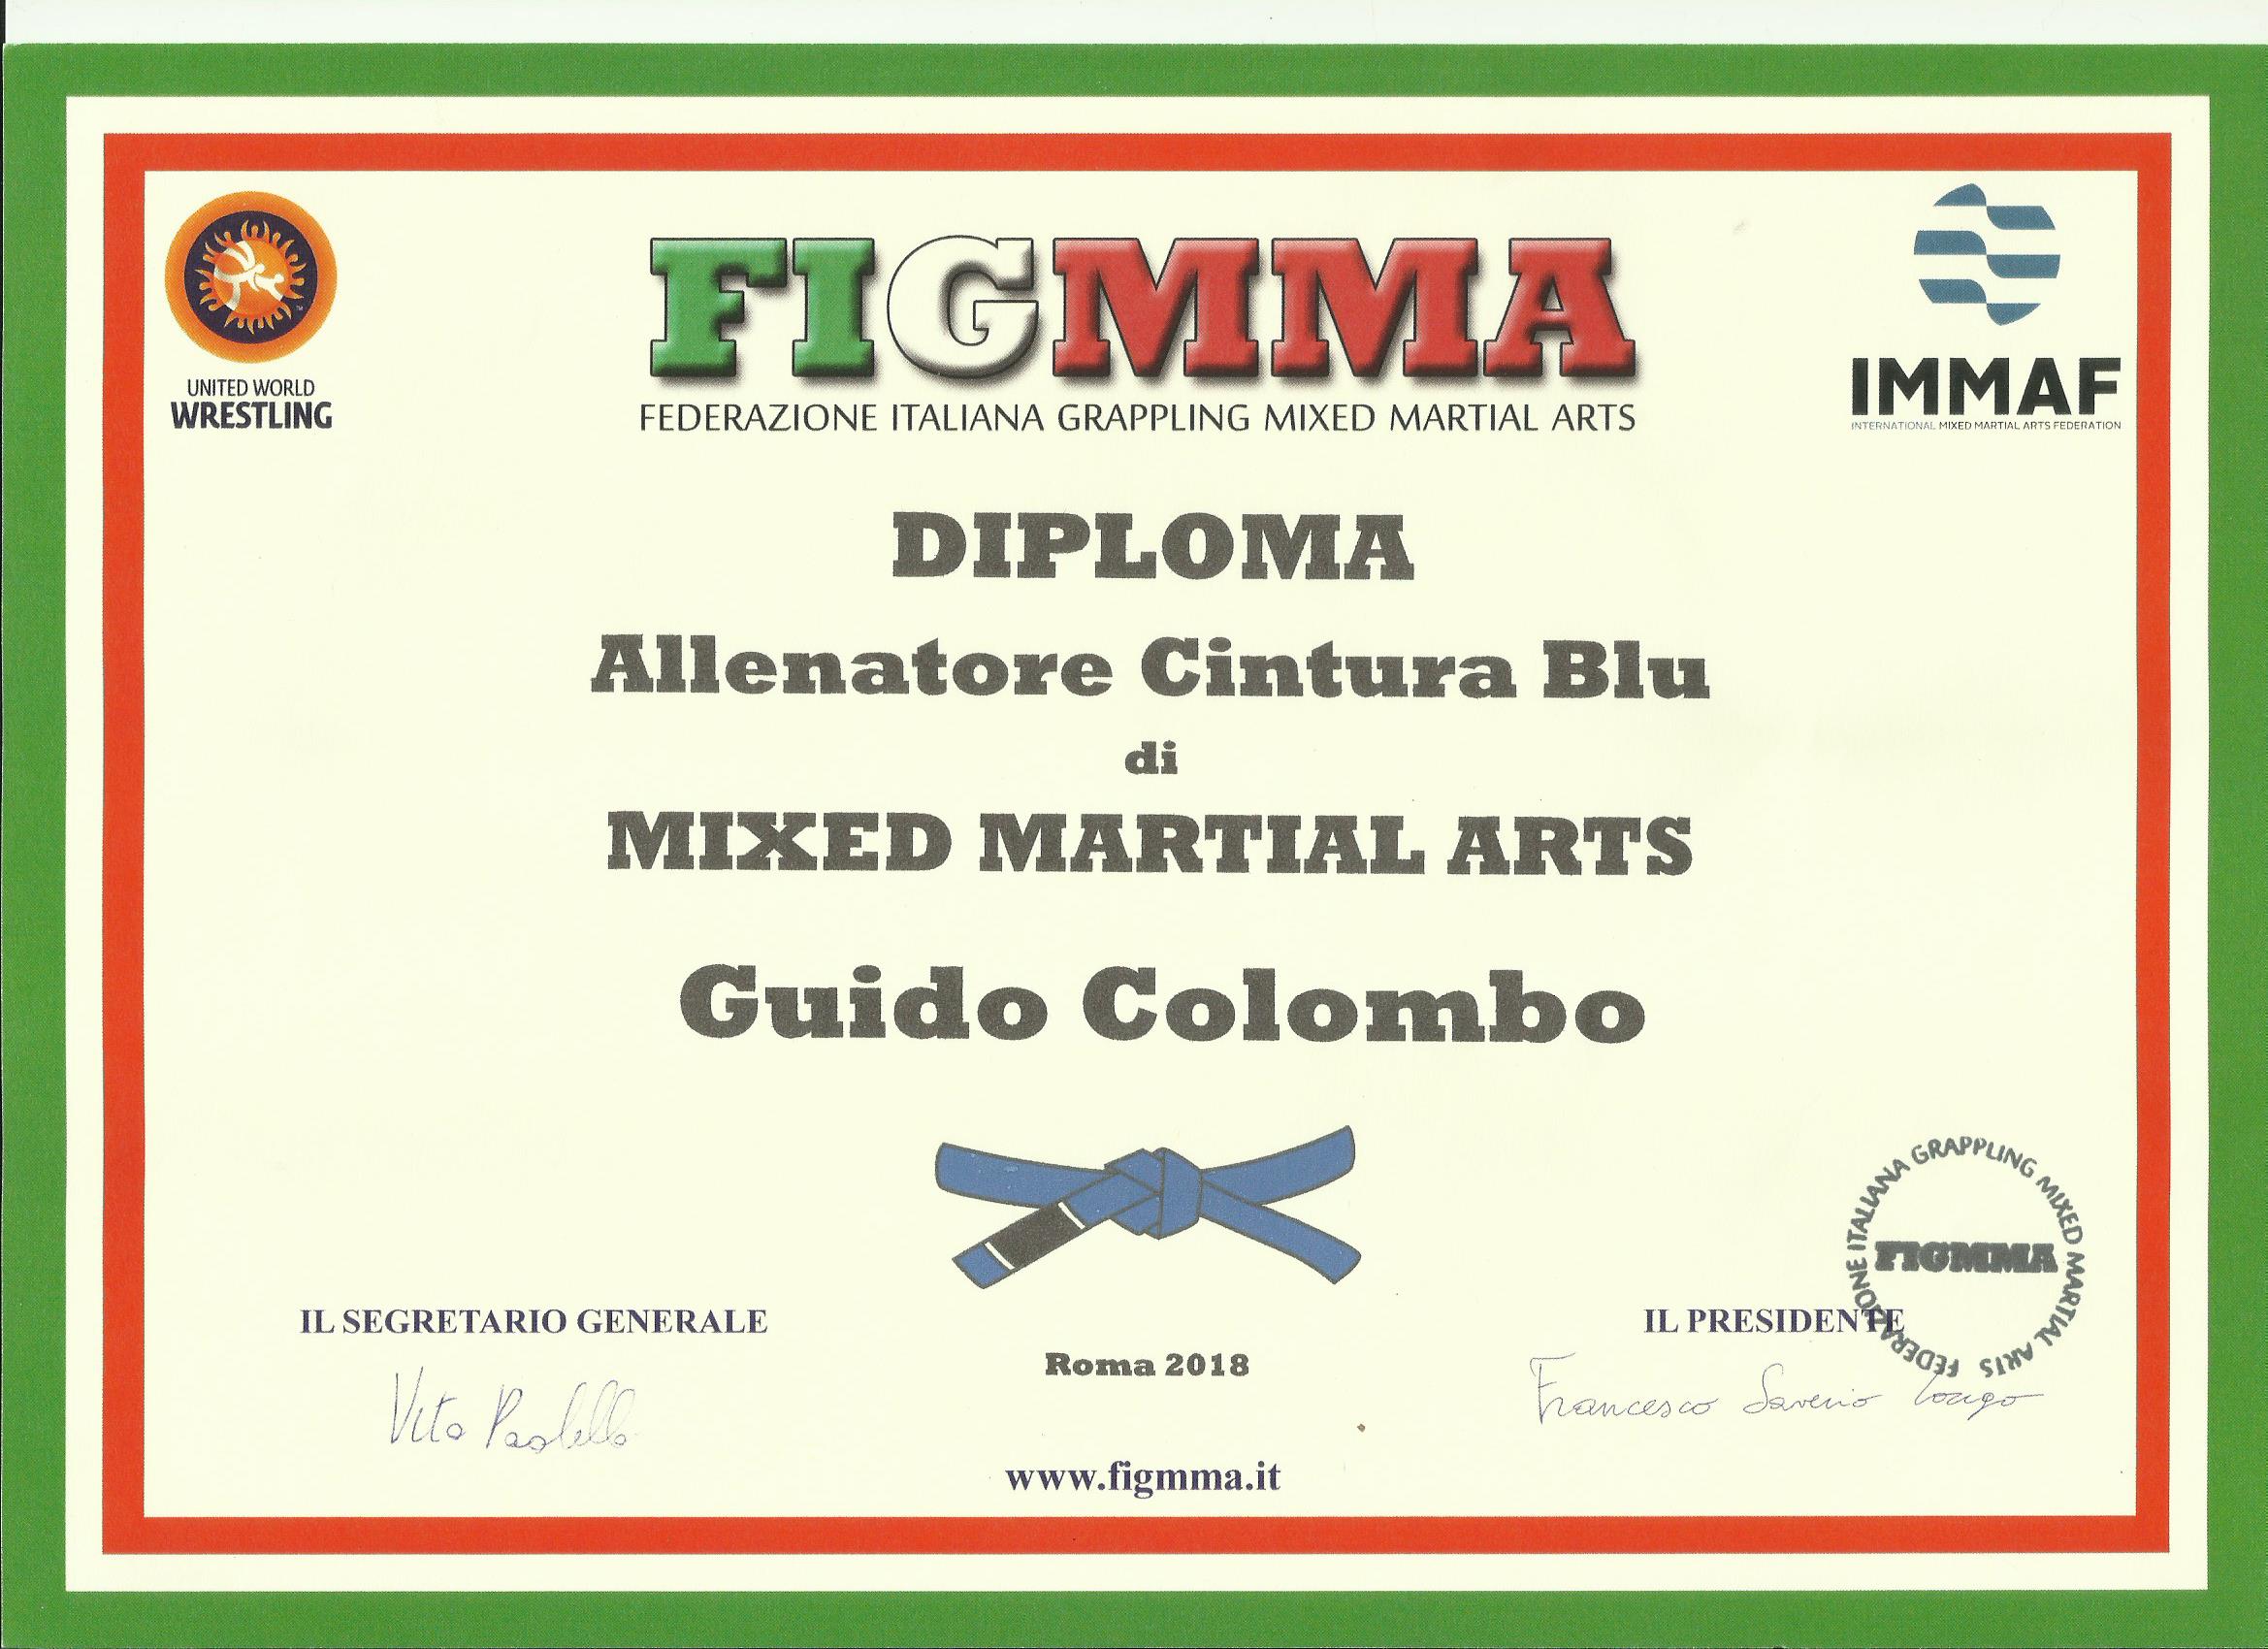 MMA-FIGMMA